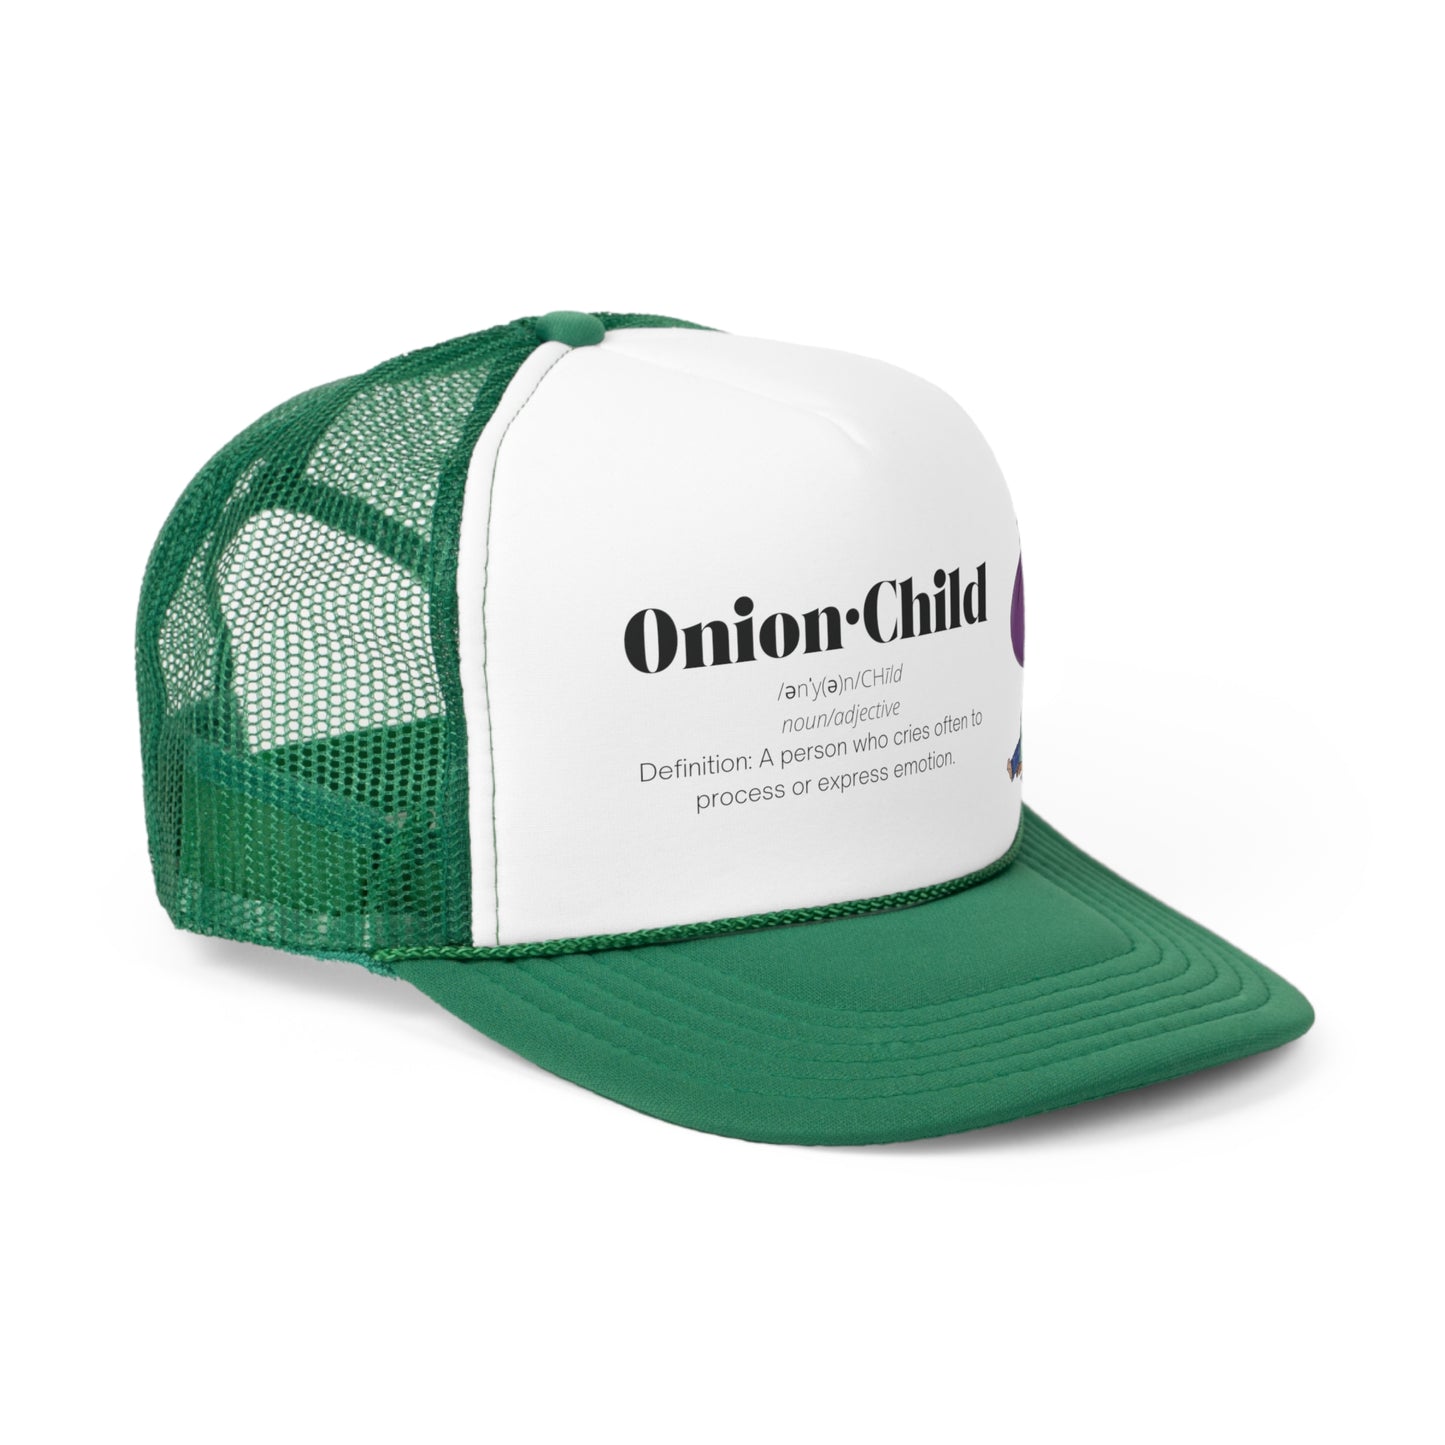 Onion Child Trucker Caps